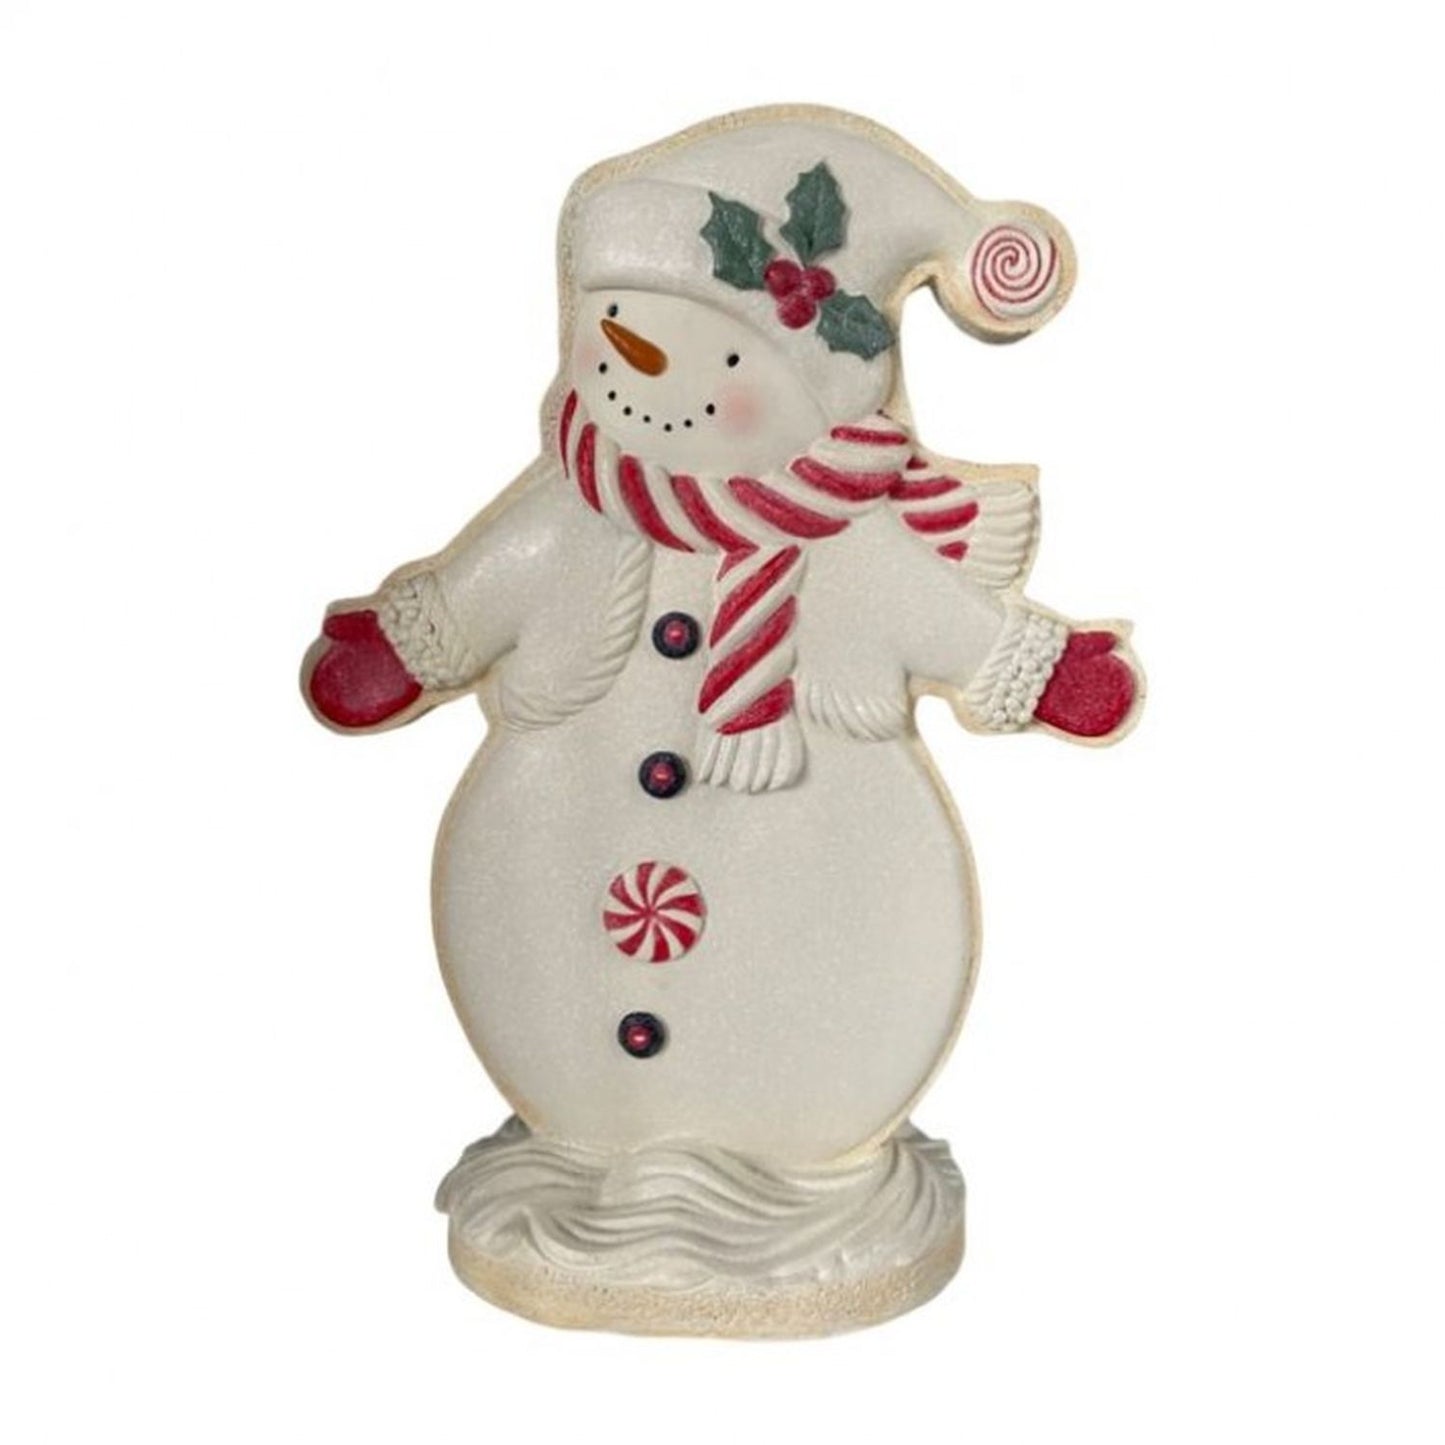 Regency International 15" Resin Gingerbread Snowman